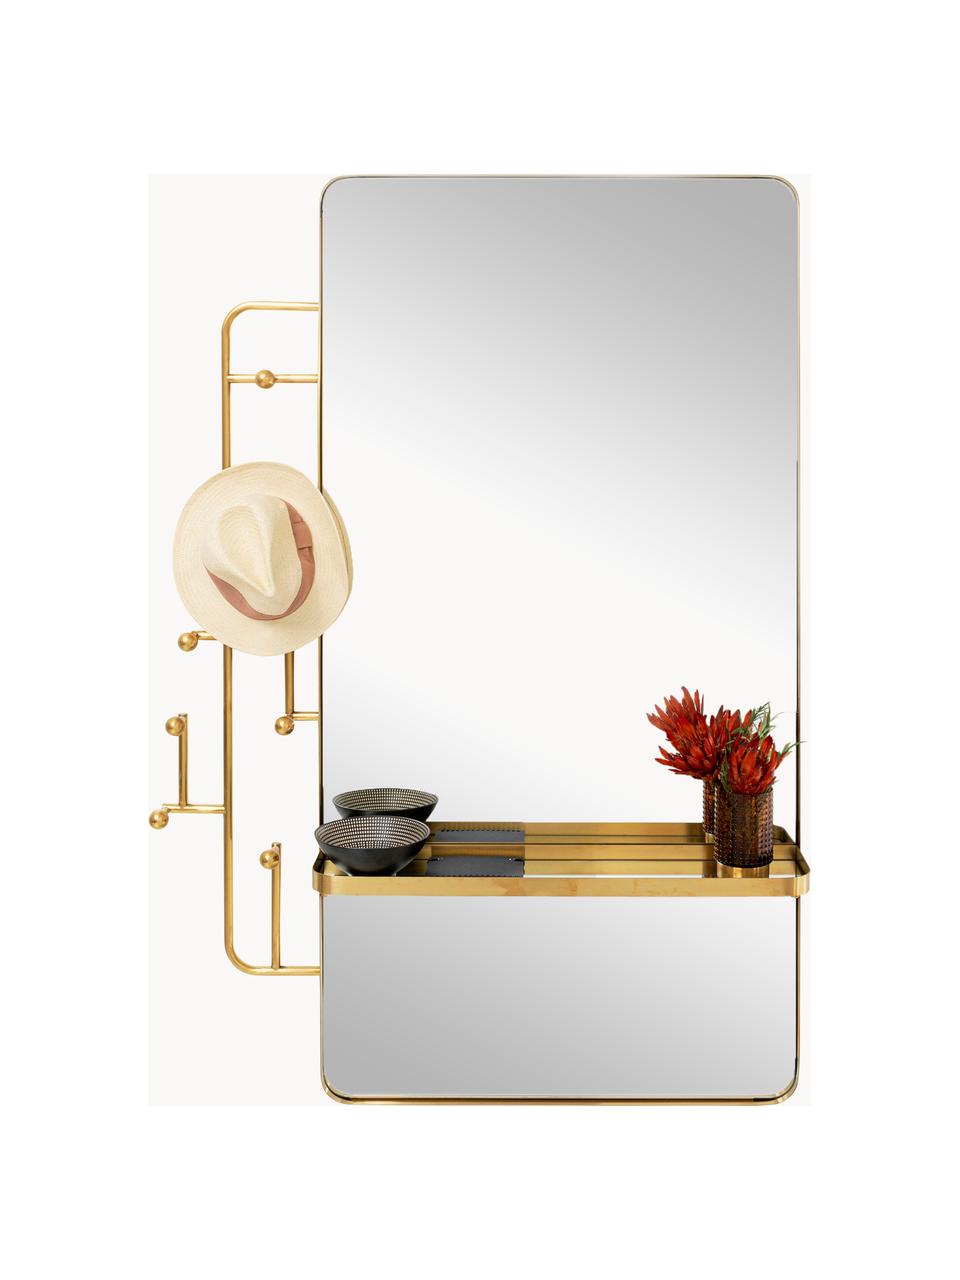 Perchero de pared con espejo Tristan, Espejo: cristal, Estante: metal recubierto, espejo , Dorado, An 102 x Al 150 cm